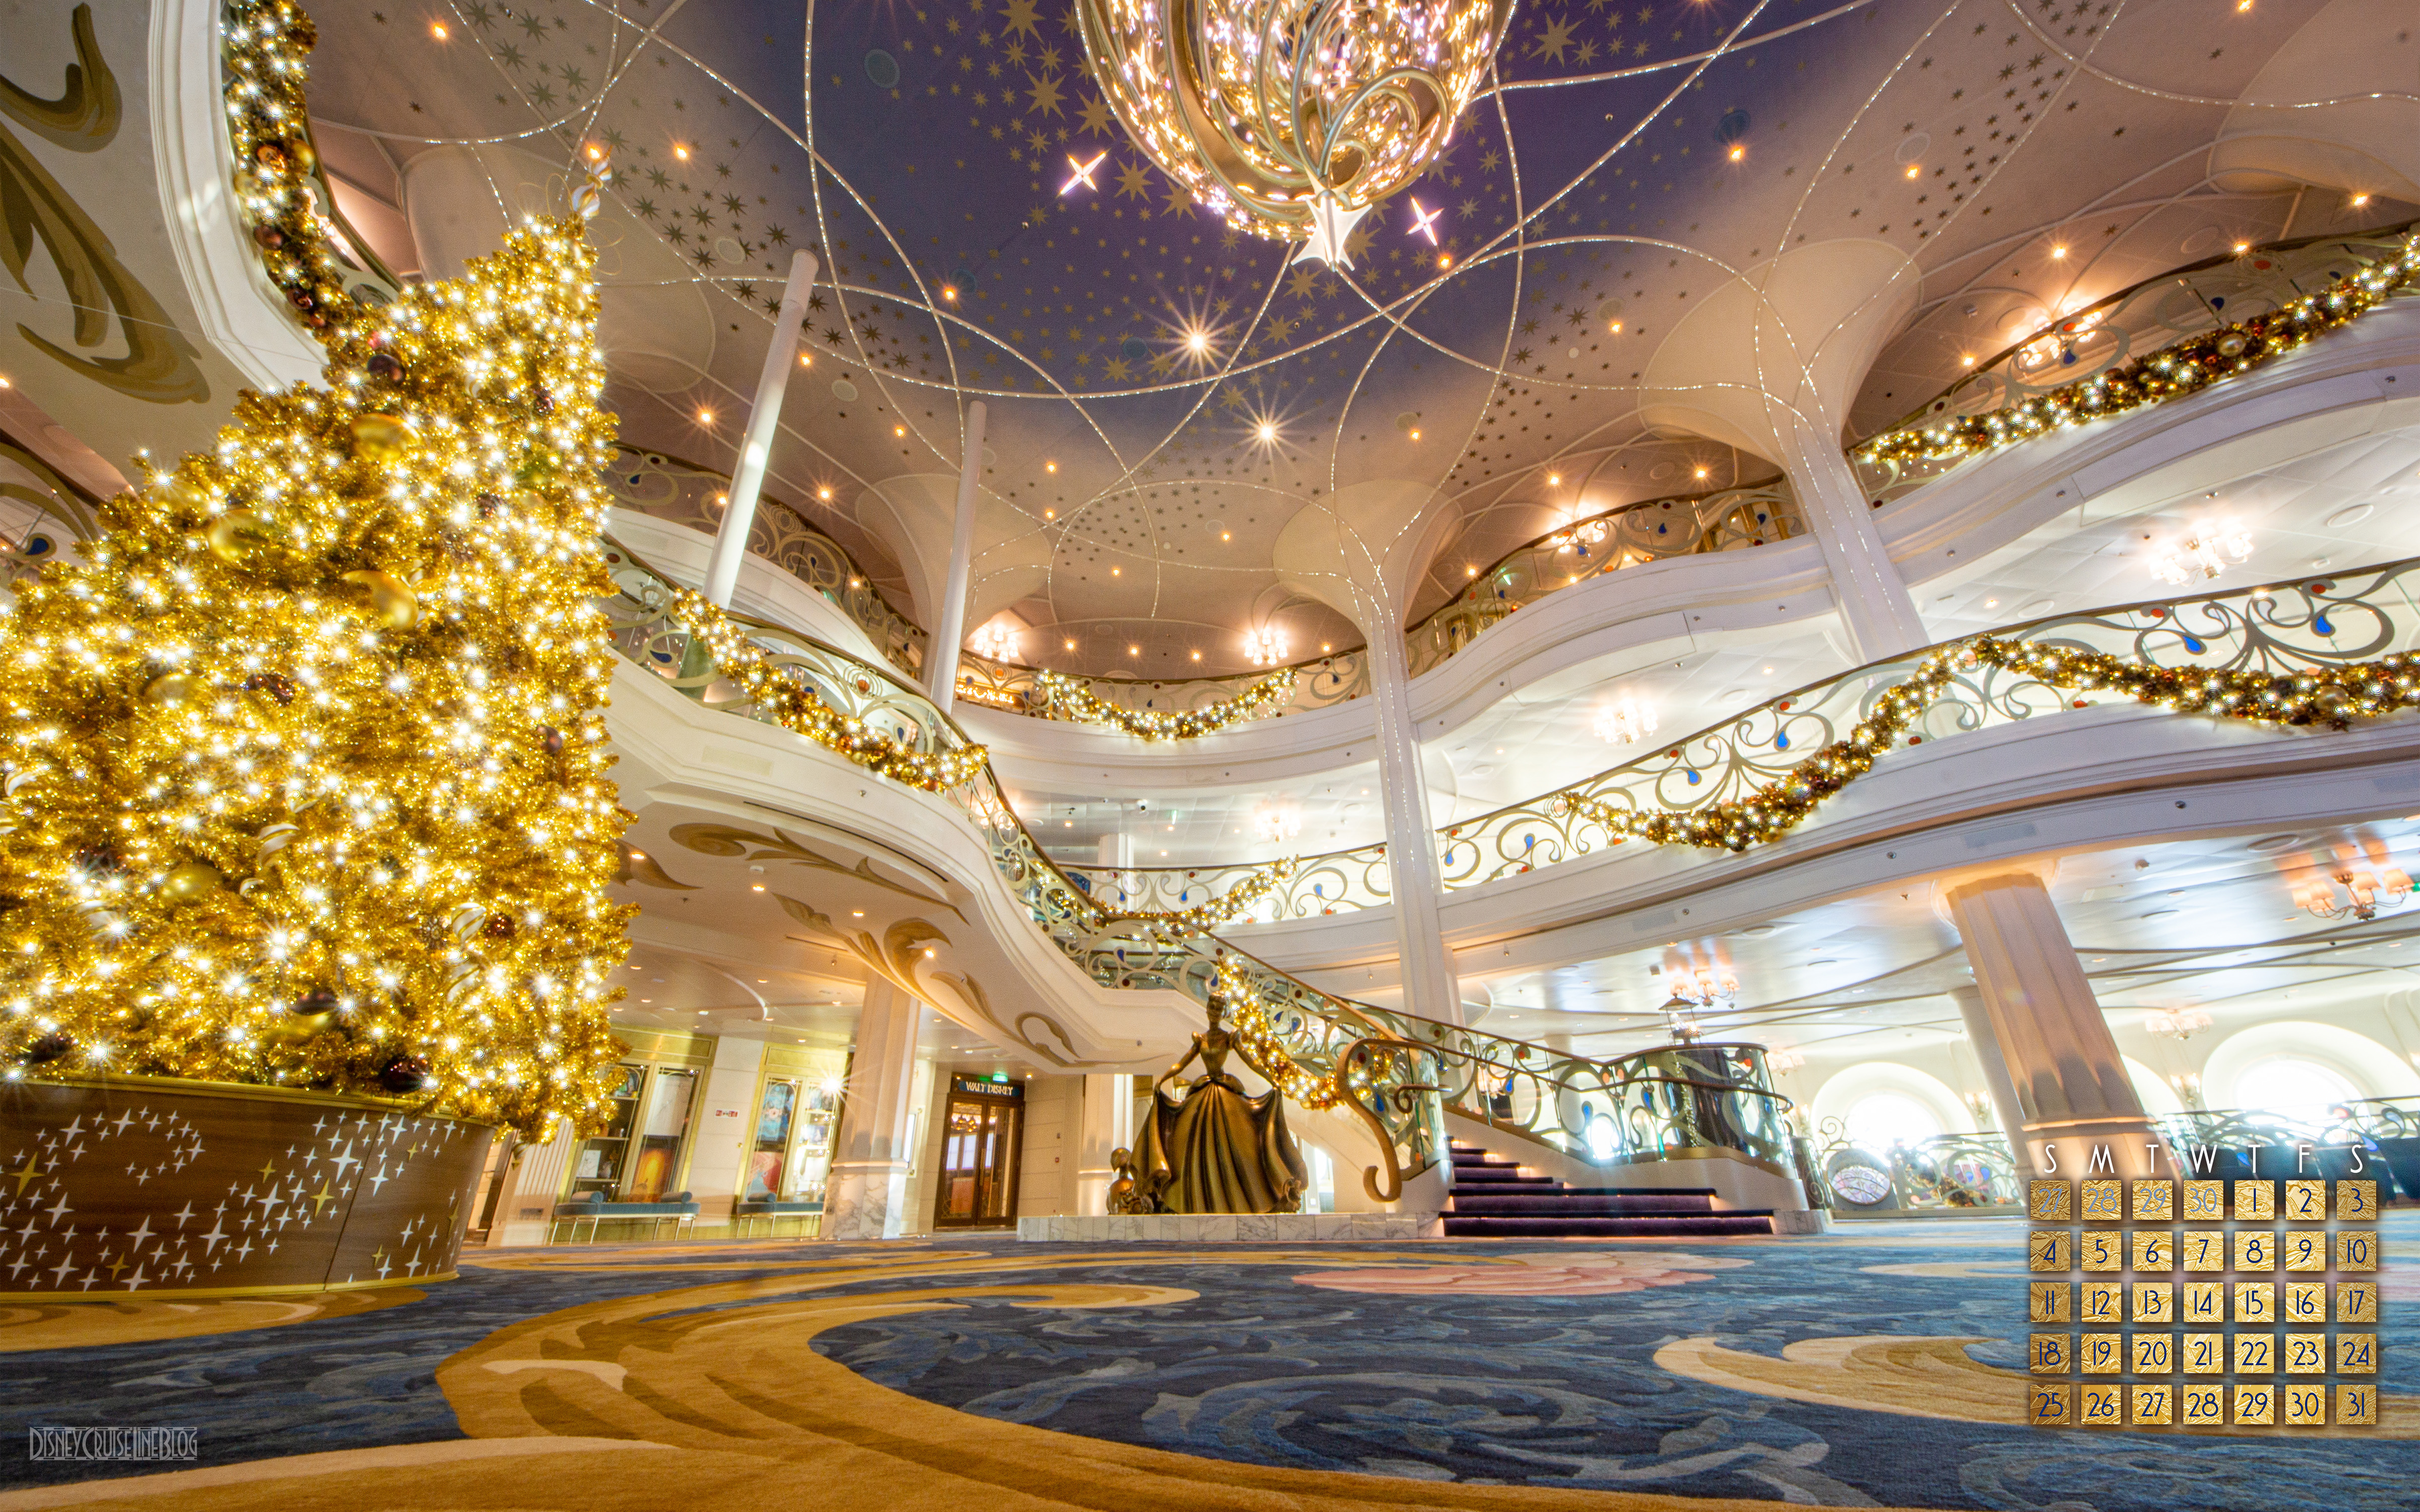 December 22 Disney Wish Grand Hall Very Merrytime Desktop Wallpaper The Disney Cruise Line Blog